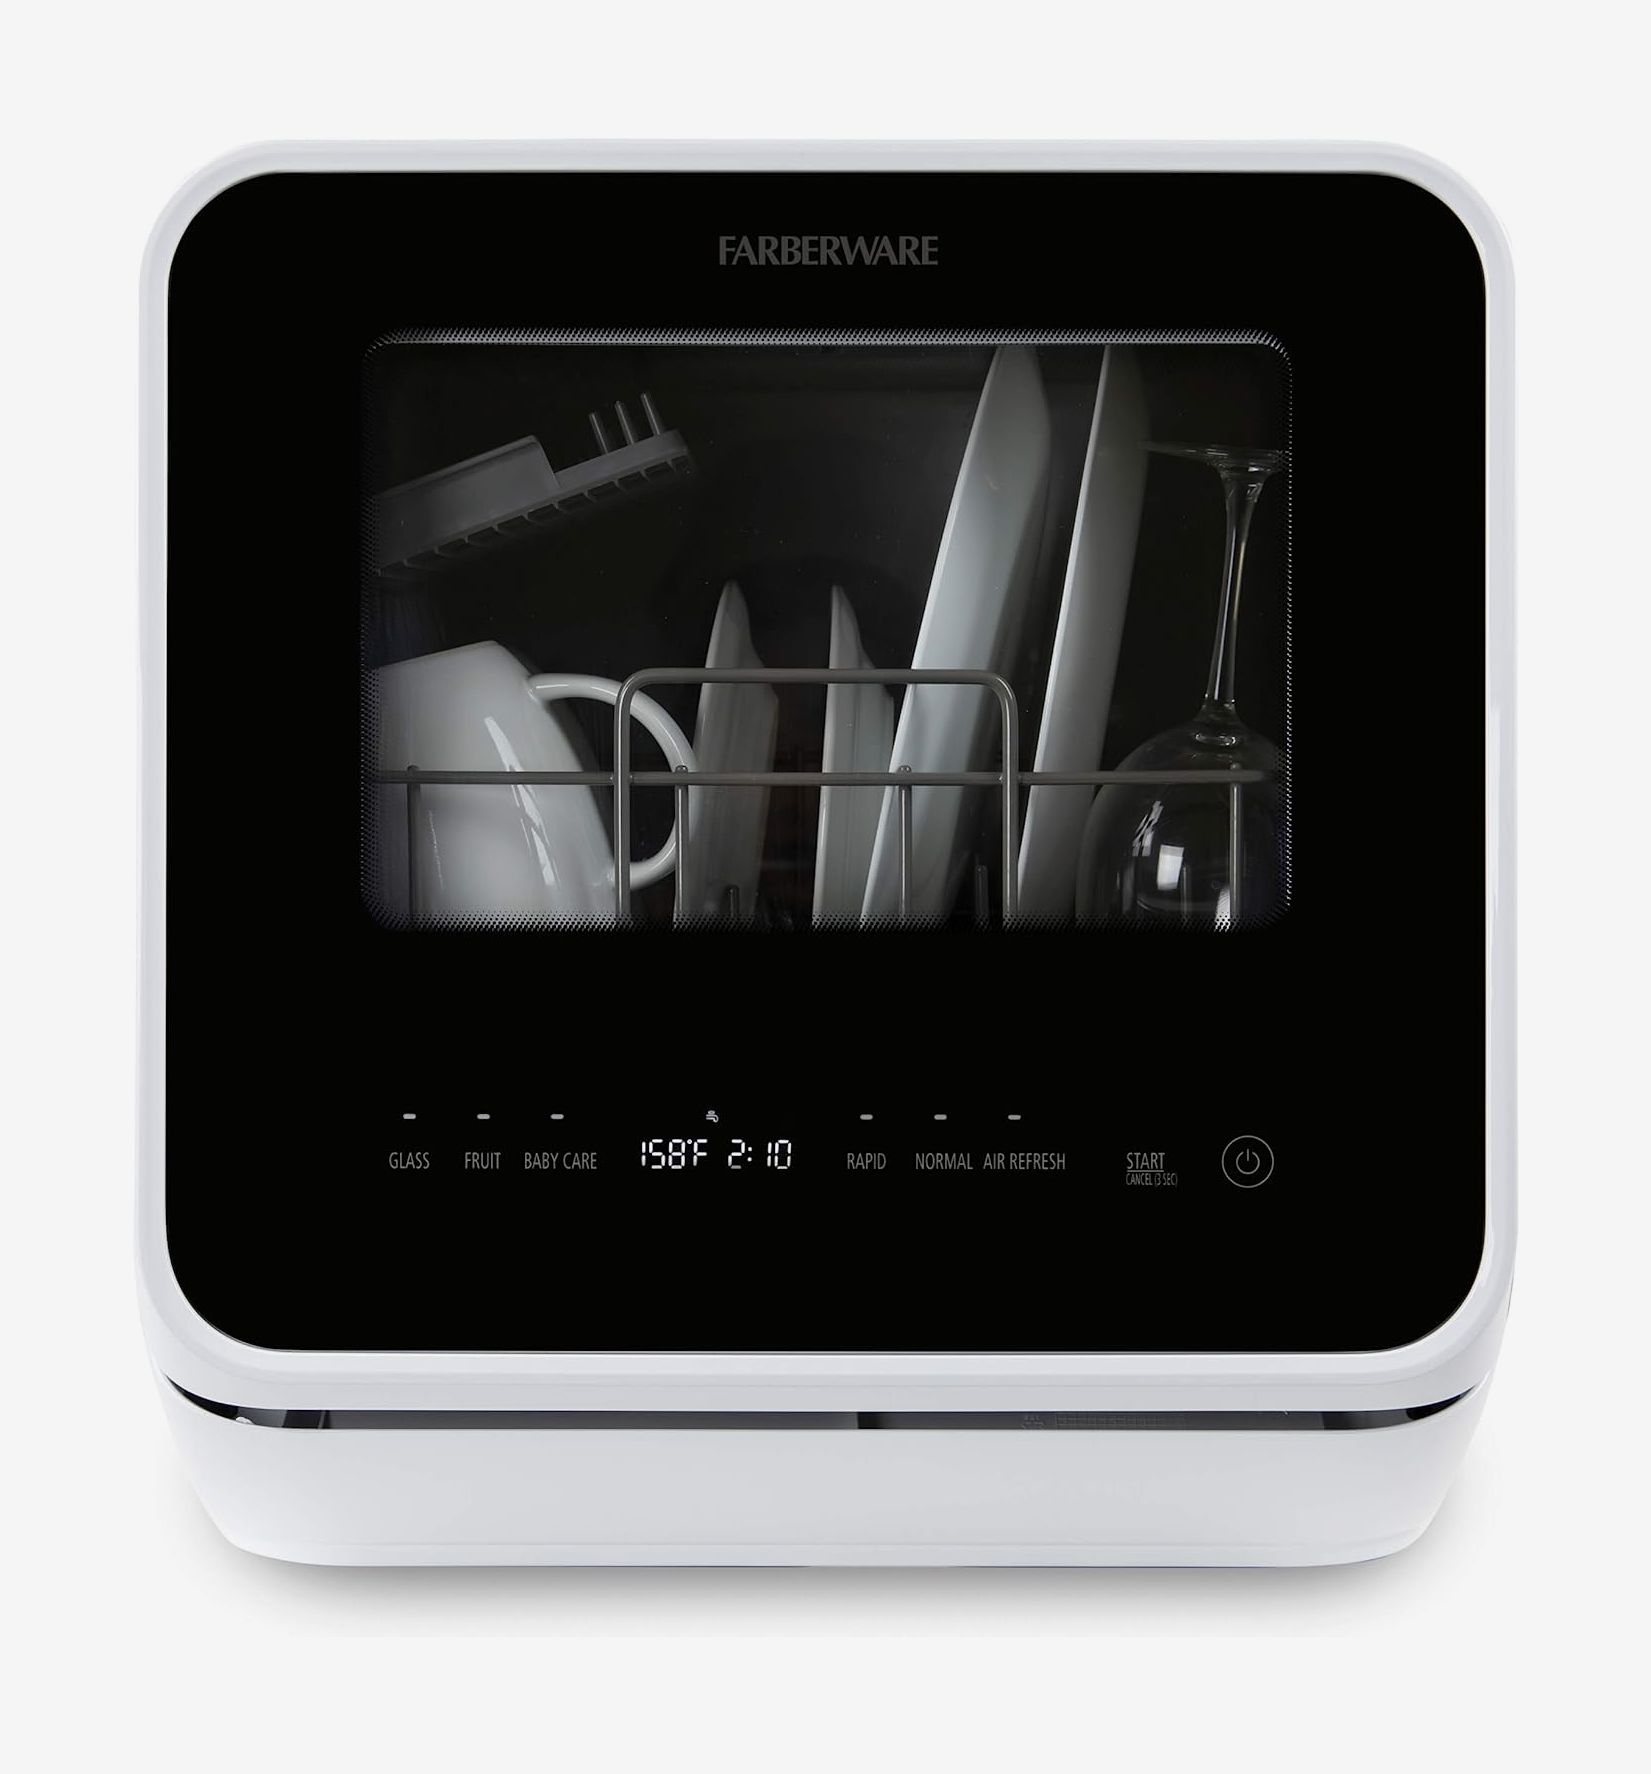 DNYSYSJ Portable Countertop Dishwasher 4 Washing Programs Display Automatic Dishwashing 